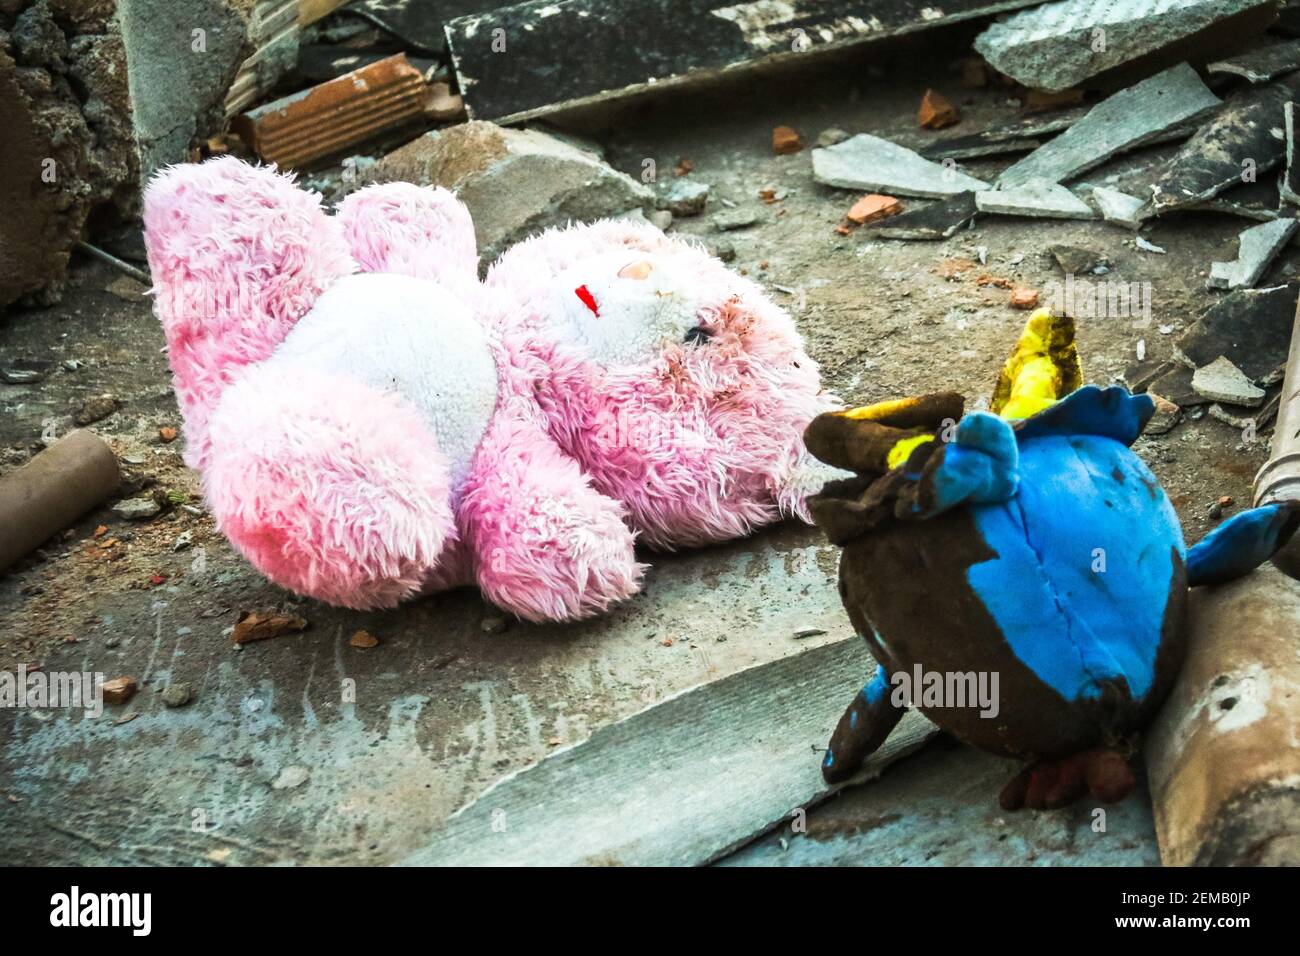 BRUMADINHO, MG - 27,01.2019: TRAGÉDIA EM BRUMADINHO MG - Spielzeug und  Schulbedarf sind in Trümmern von Häusern in Tejuco, Brumadinho, Minas  Gerais gesehen. (Foto: Cadu Rolim/Fotoarena Stockfotografie - Alamy